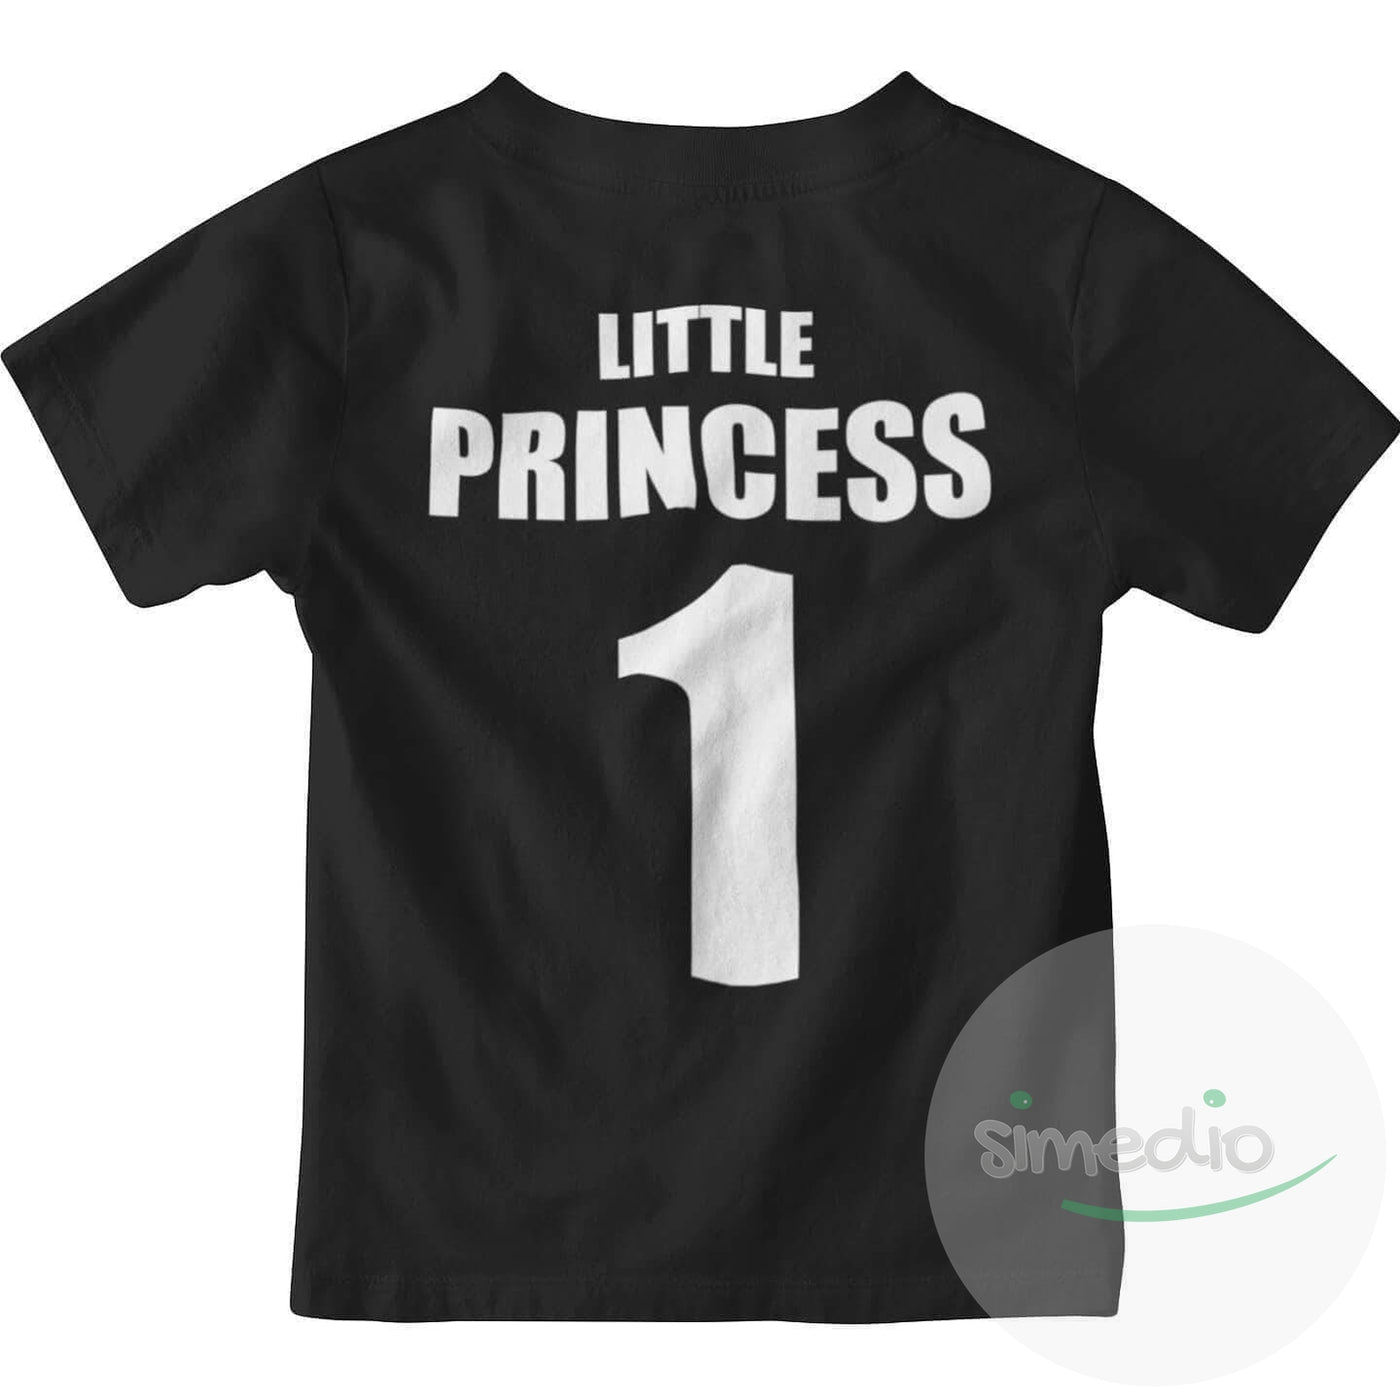 Tee shirt enfant original : PRINCE / PRINCESS, Little Princess, Noir, 2 ans - SiMEDIO